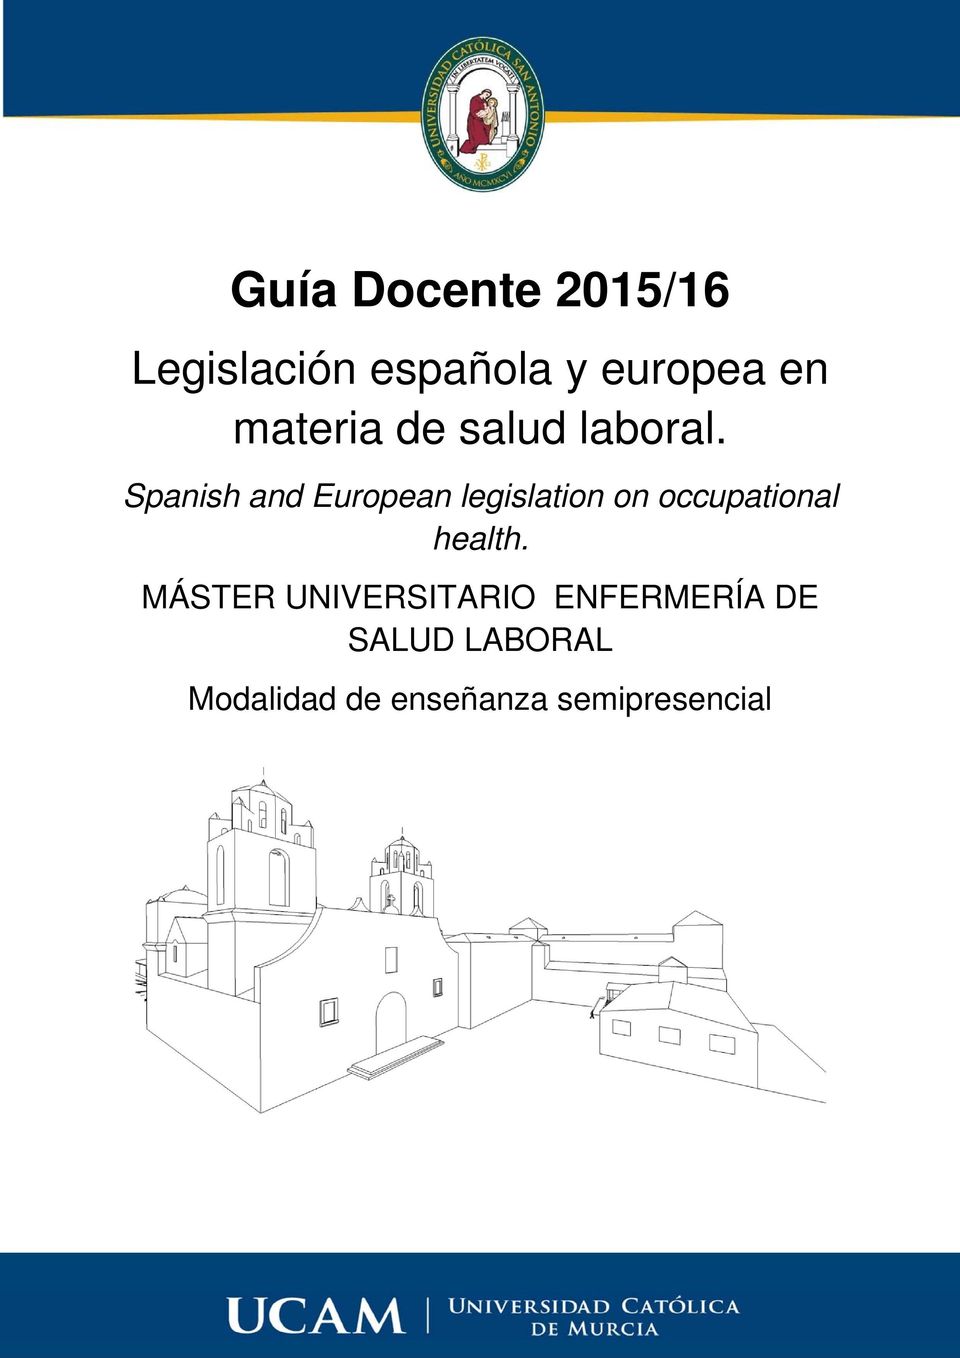 Spanish and European legislation on occupational health.